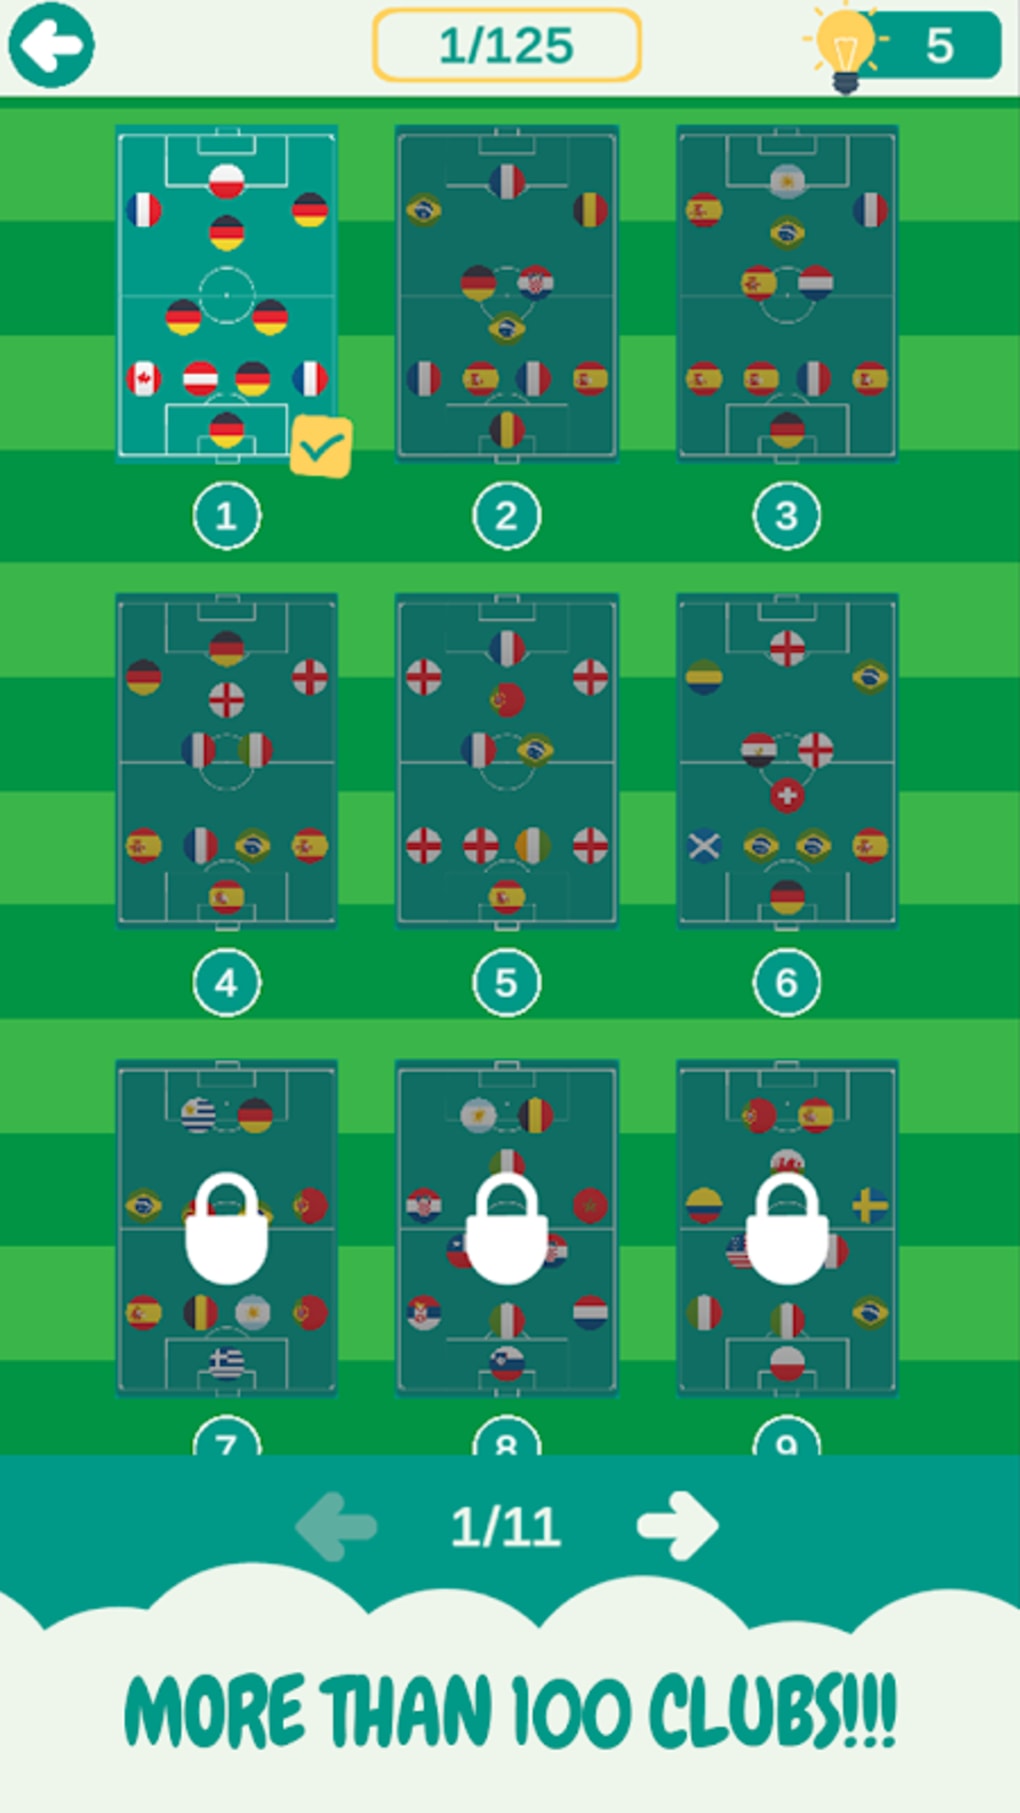 Guess The Football Team - Football Quiz 2021 APK para Android